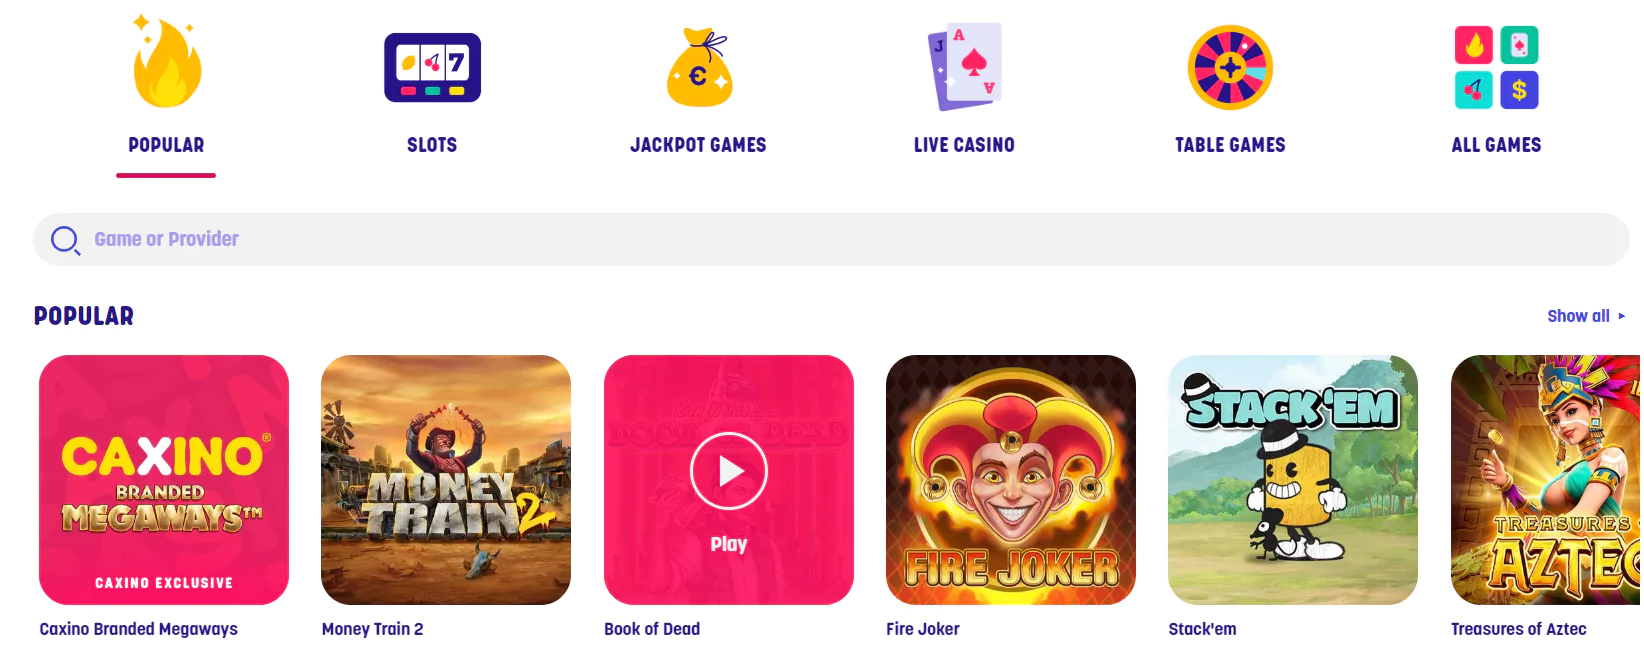 Screenshot of $1 Minimum Deposit Casino Games